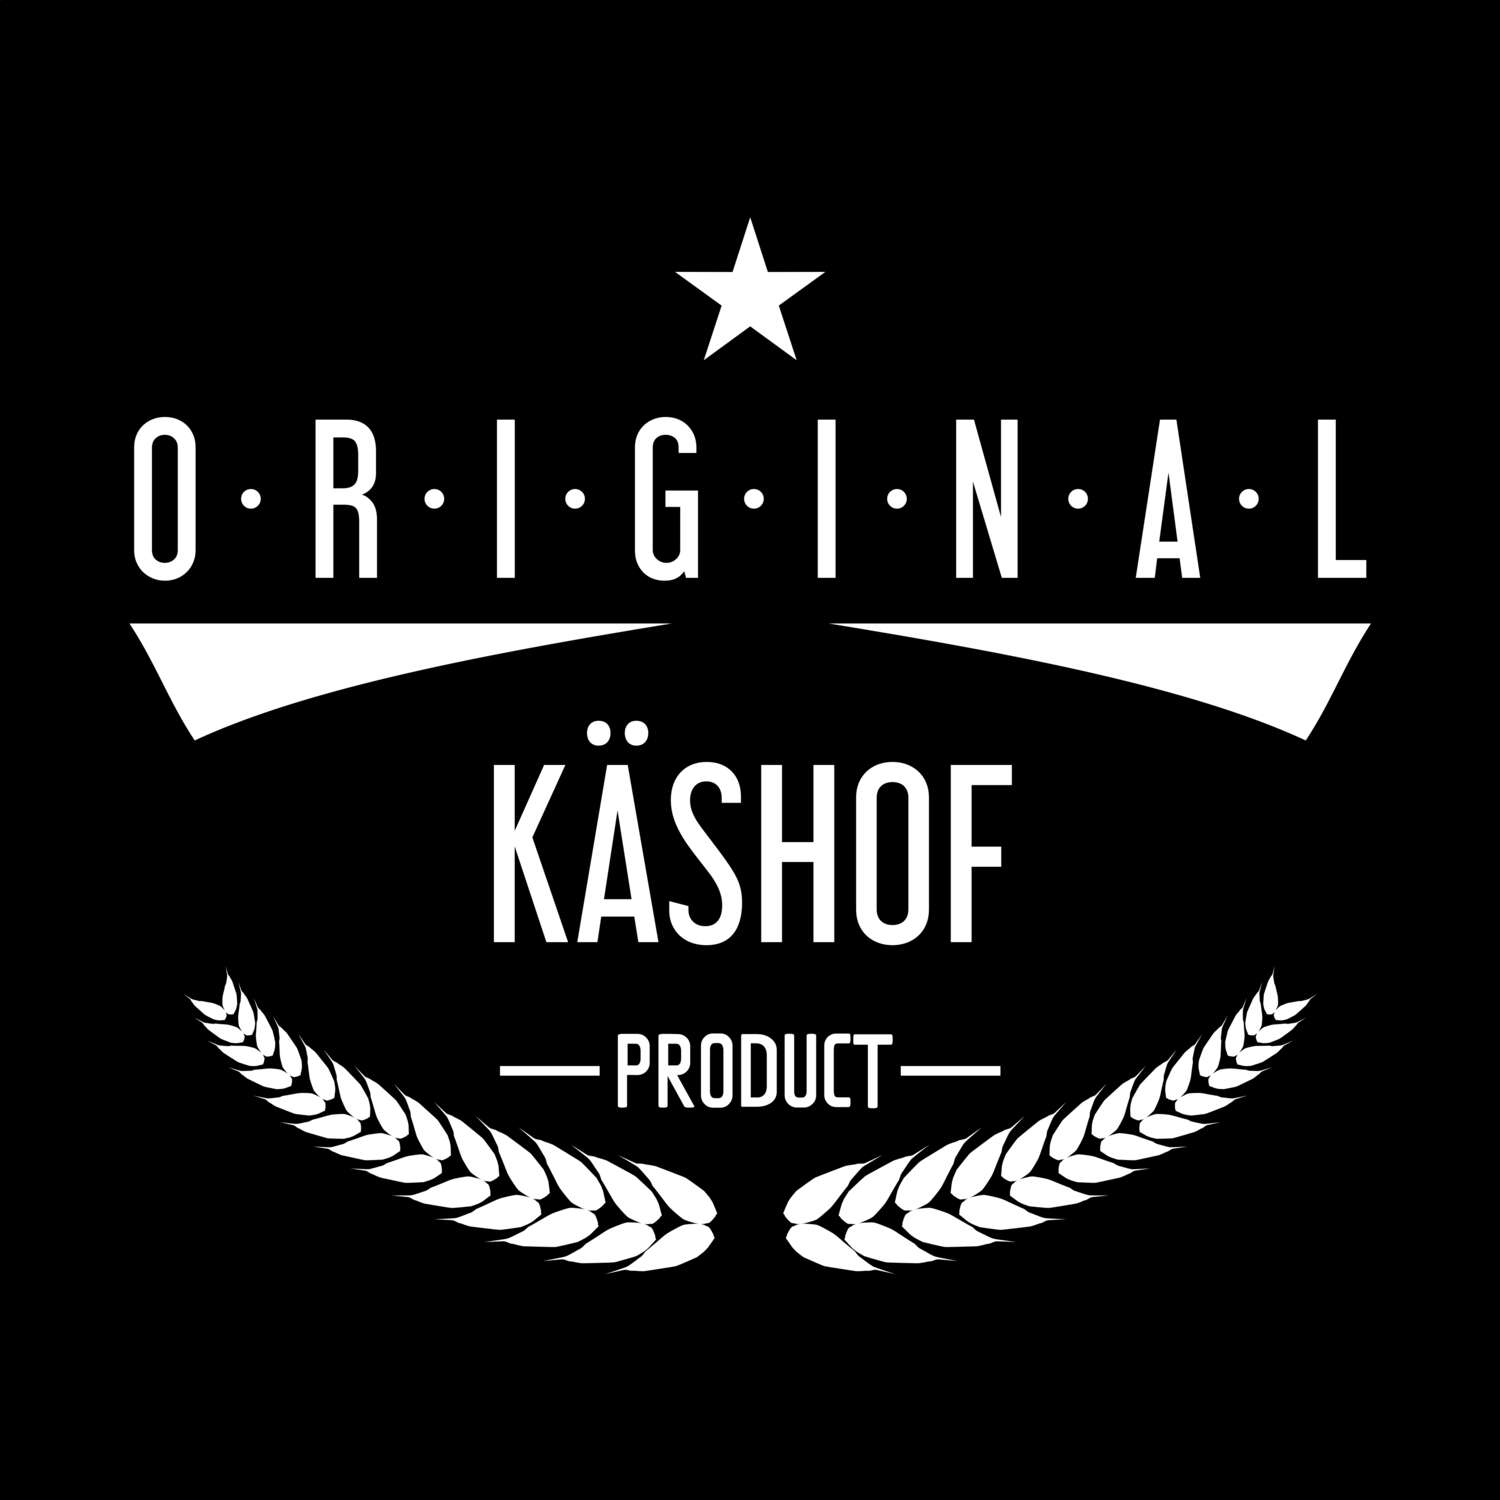 Käshof T-Shirt »Original Product«